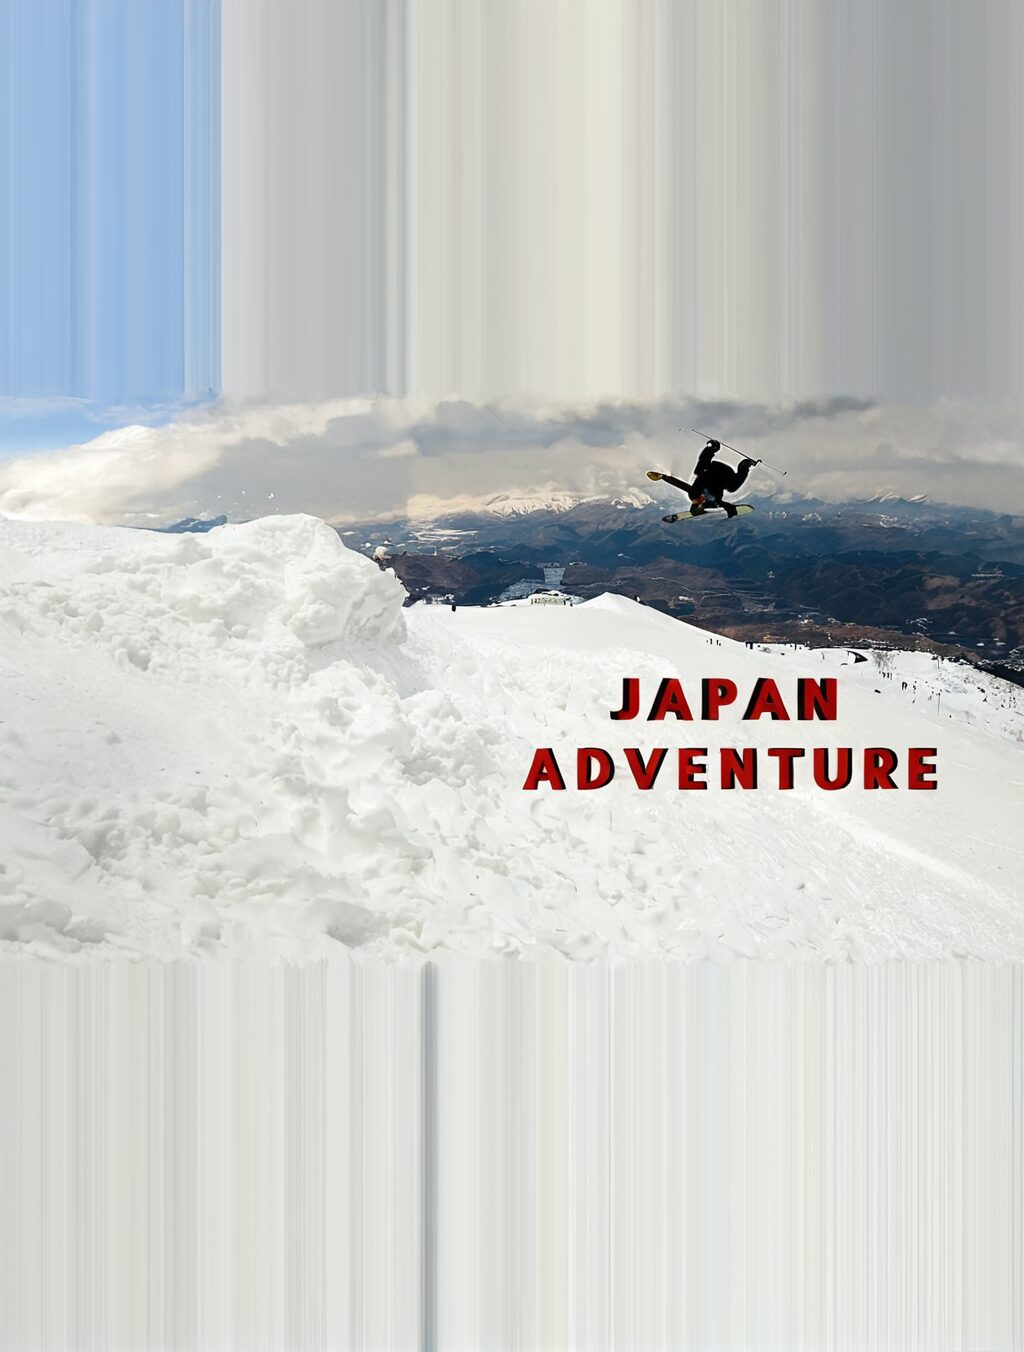 snowboarding trips to japan